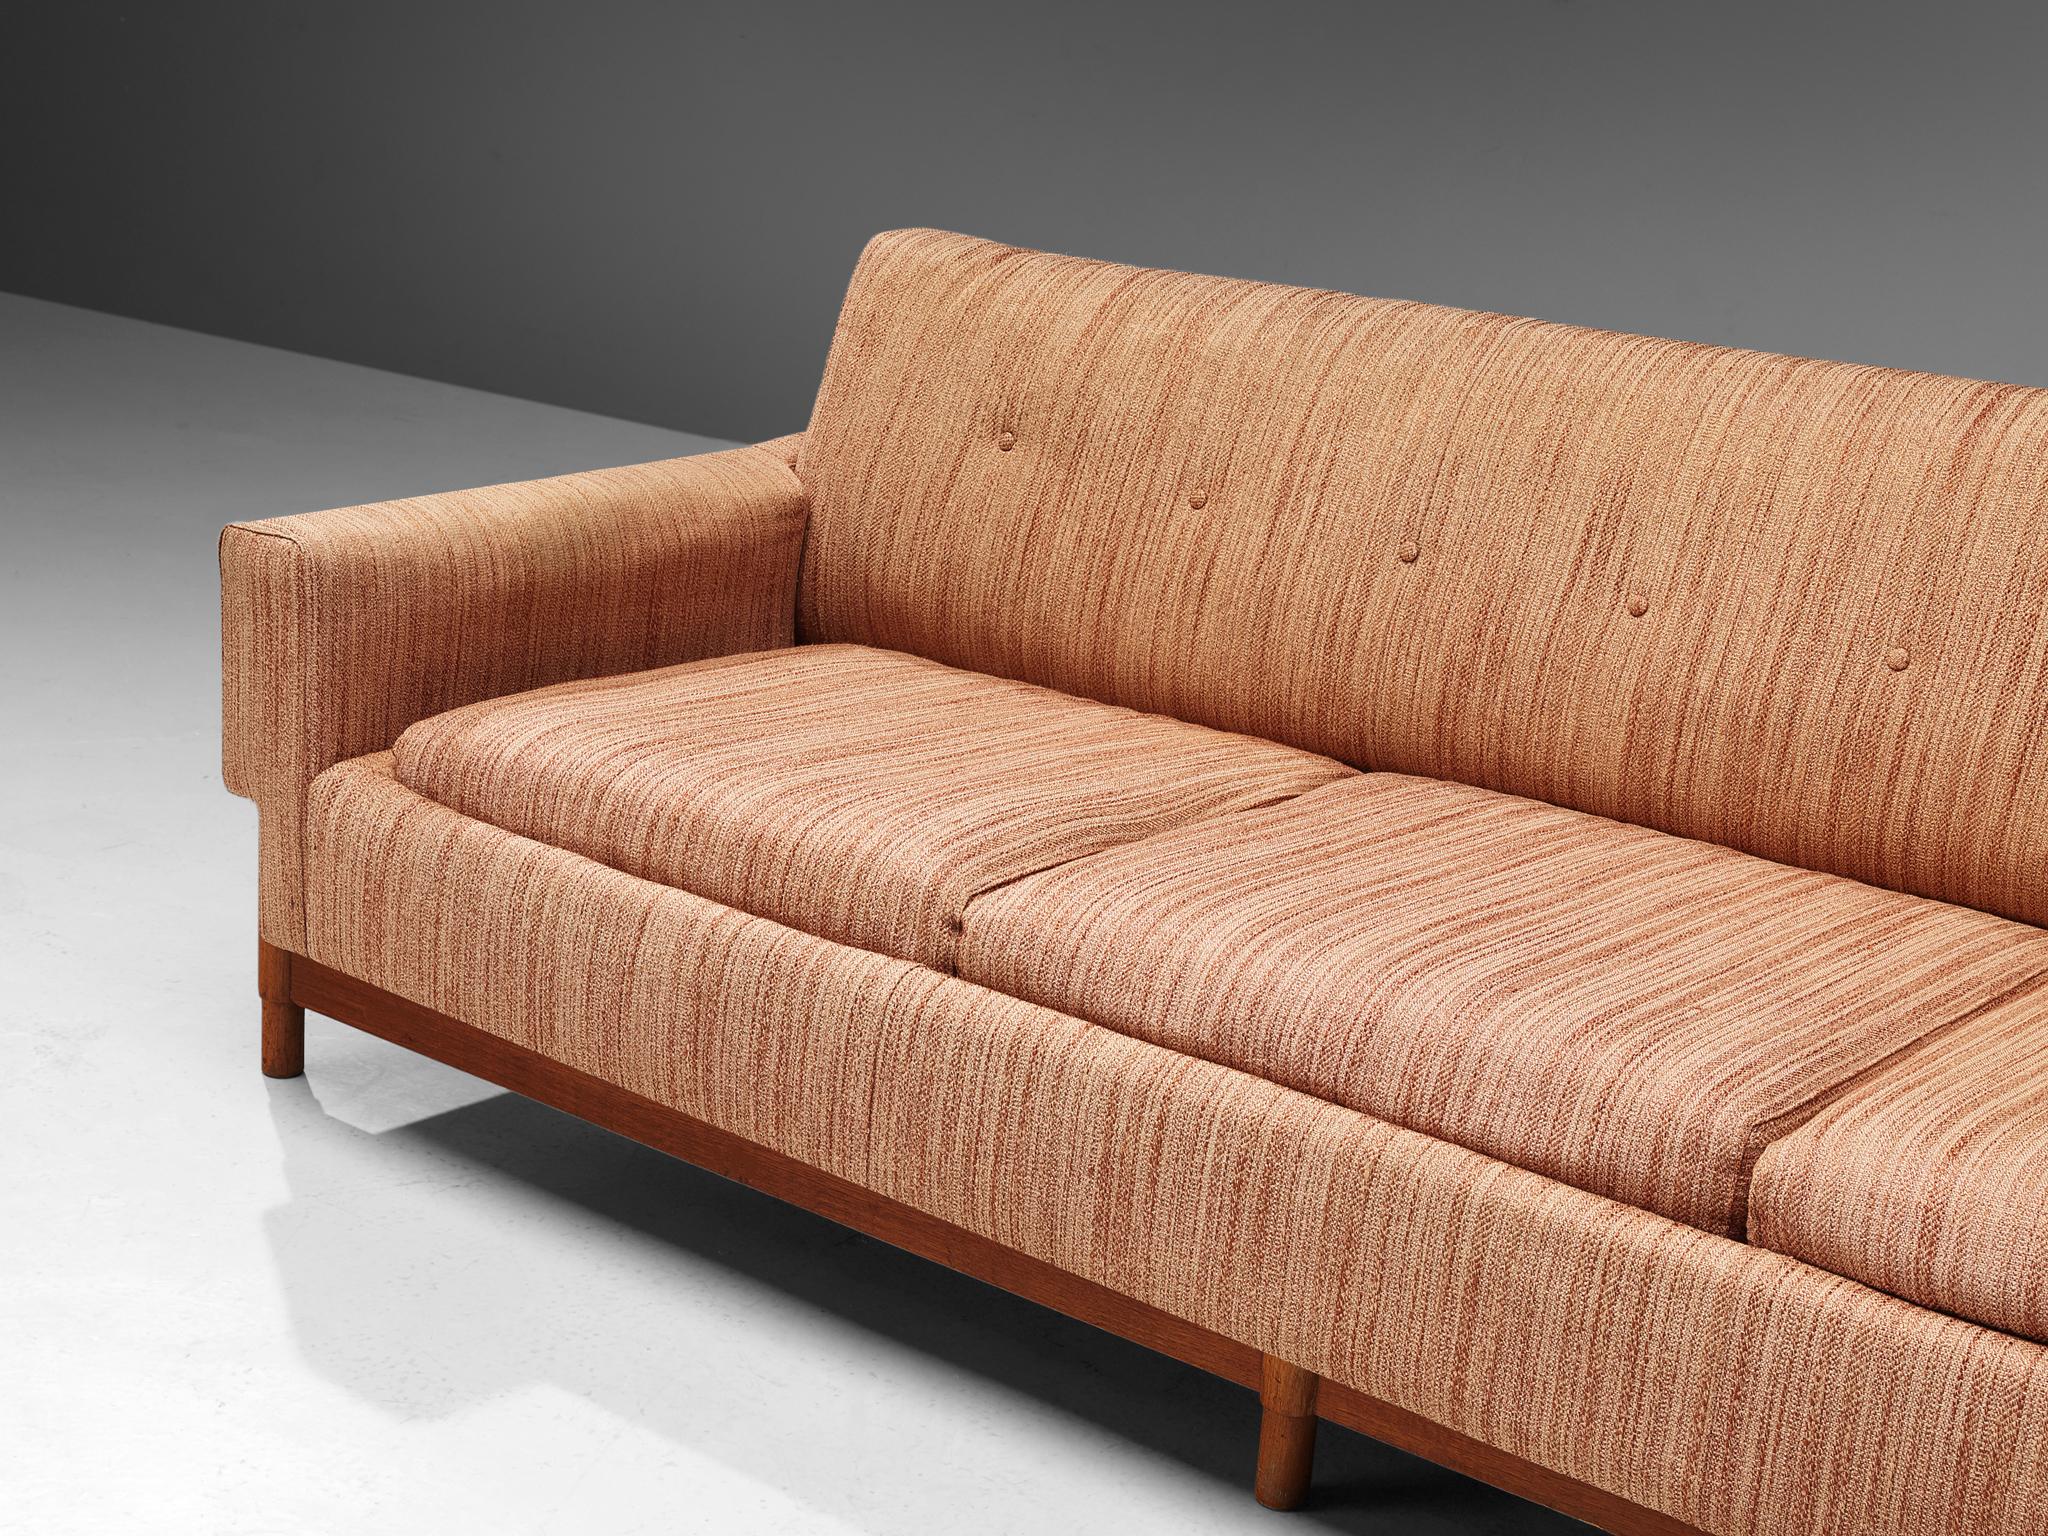 Italian Saporiti Sofa in Teak and Fabric Upholstery